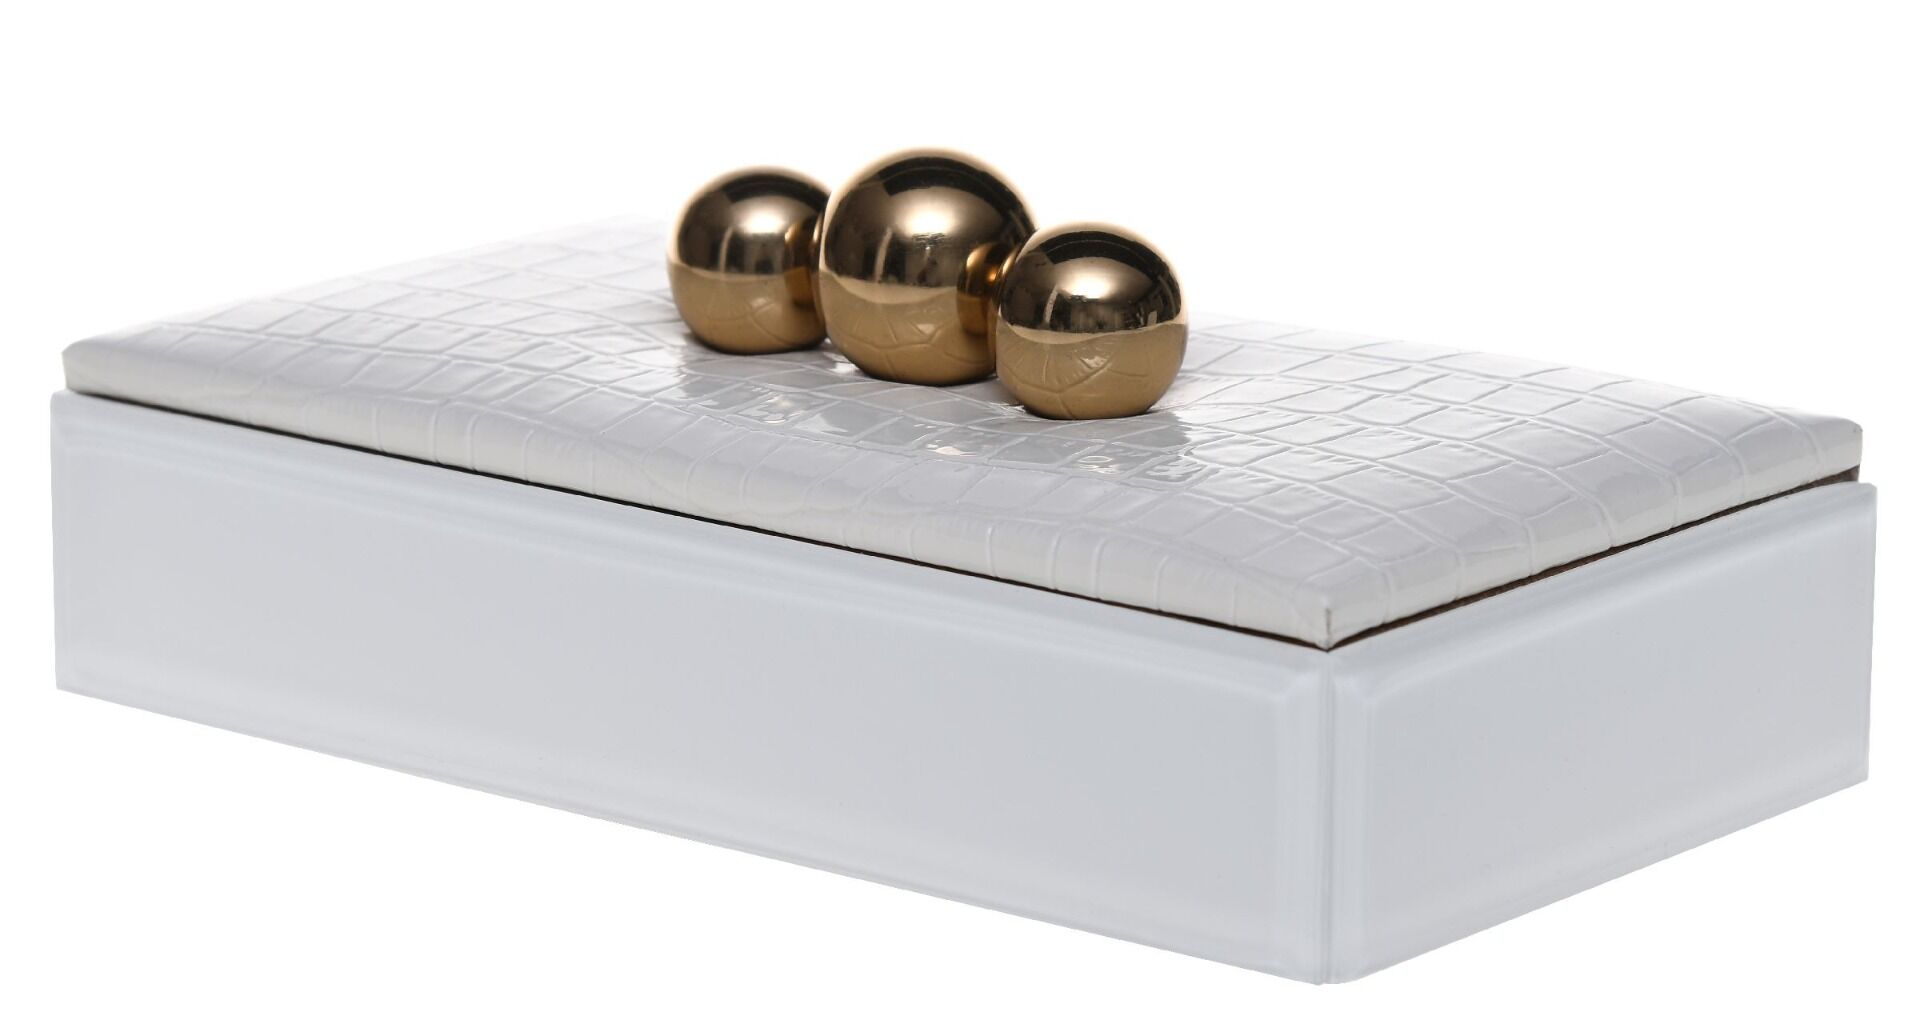 Pudełko ozdobne Cofanetto srebrne kule 20x10x4cm